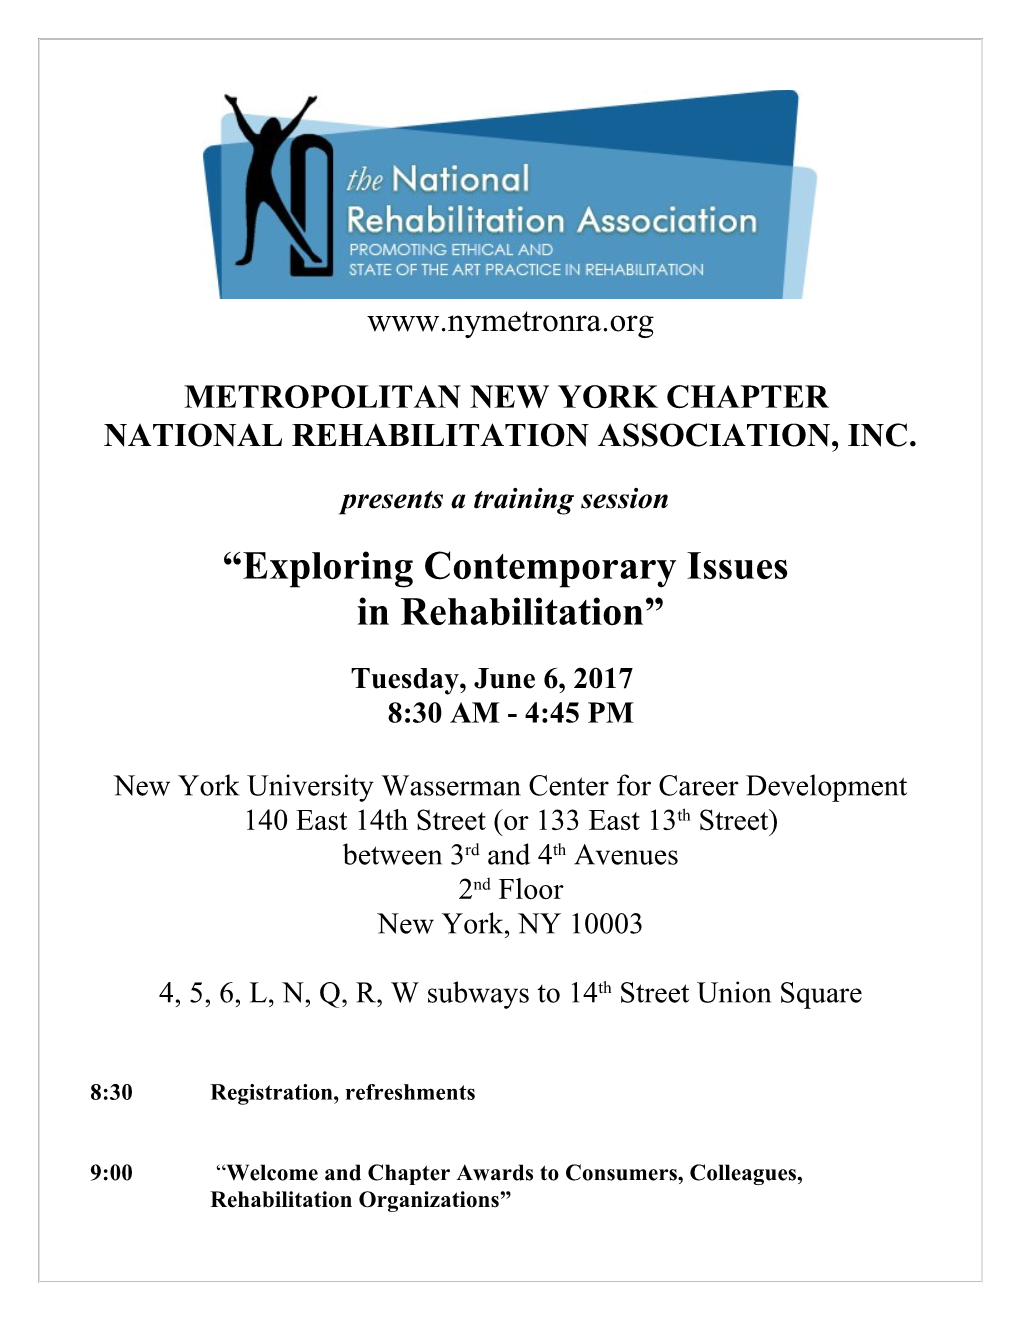 National Rehabilitation Association